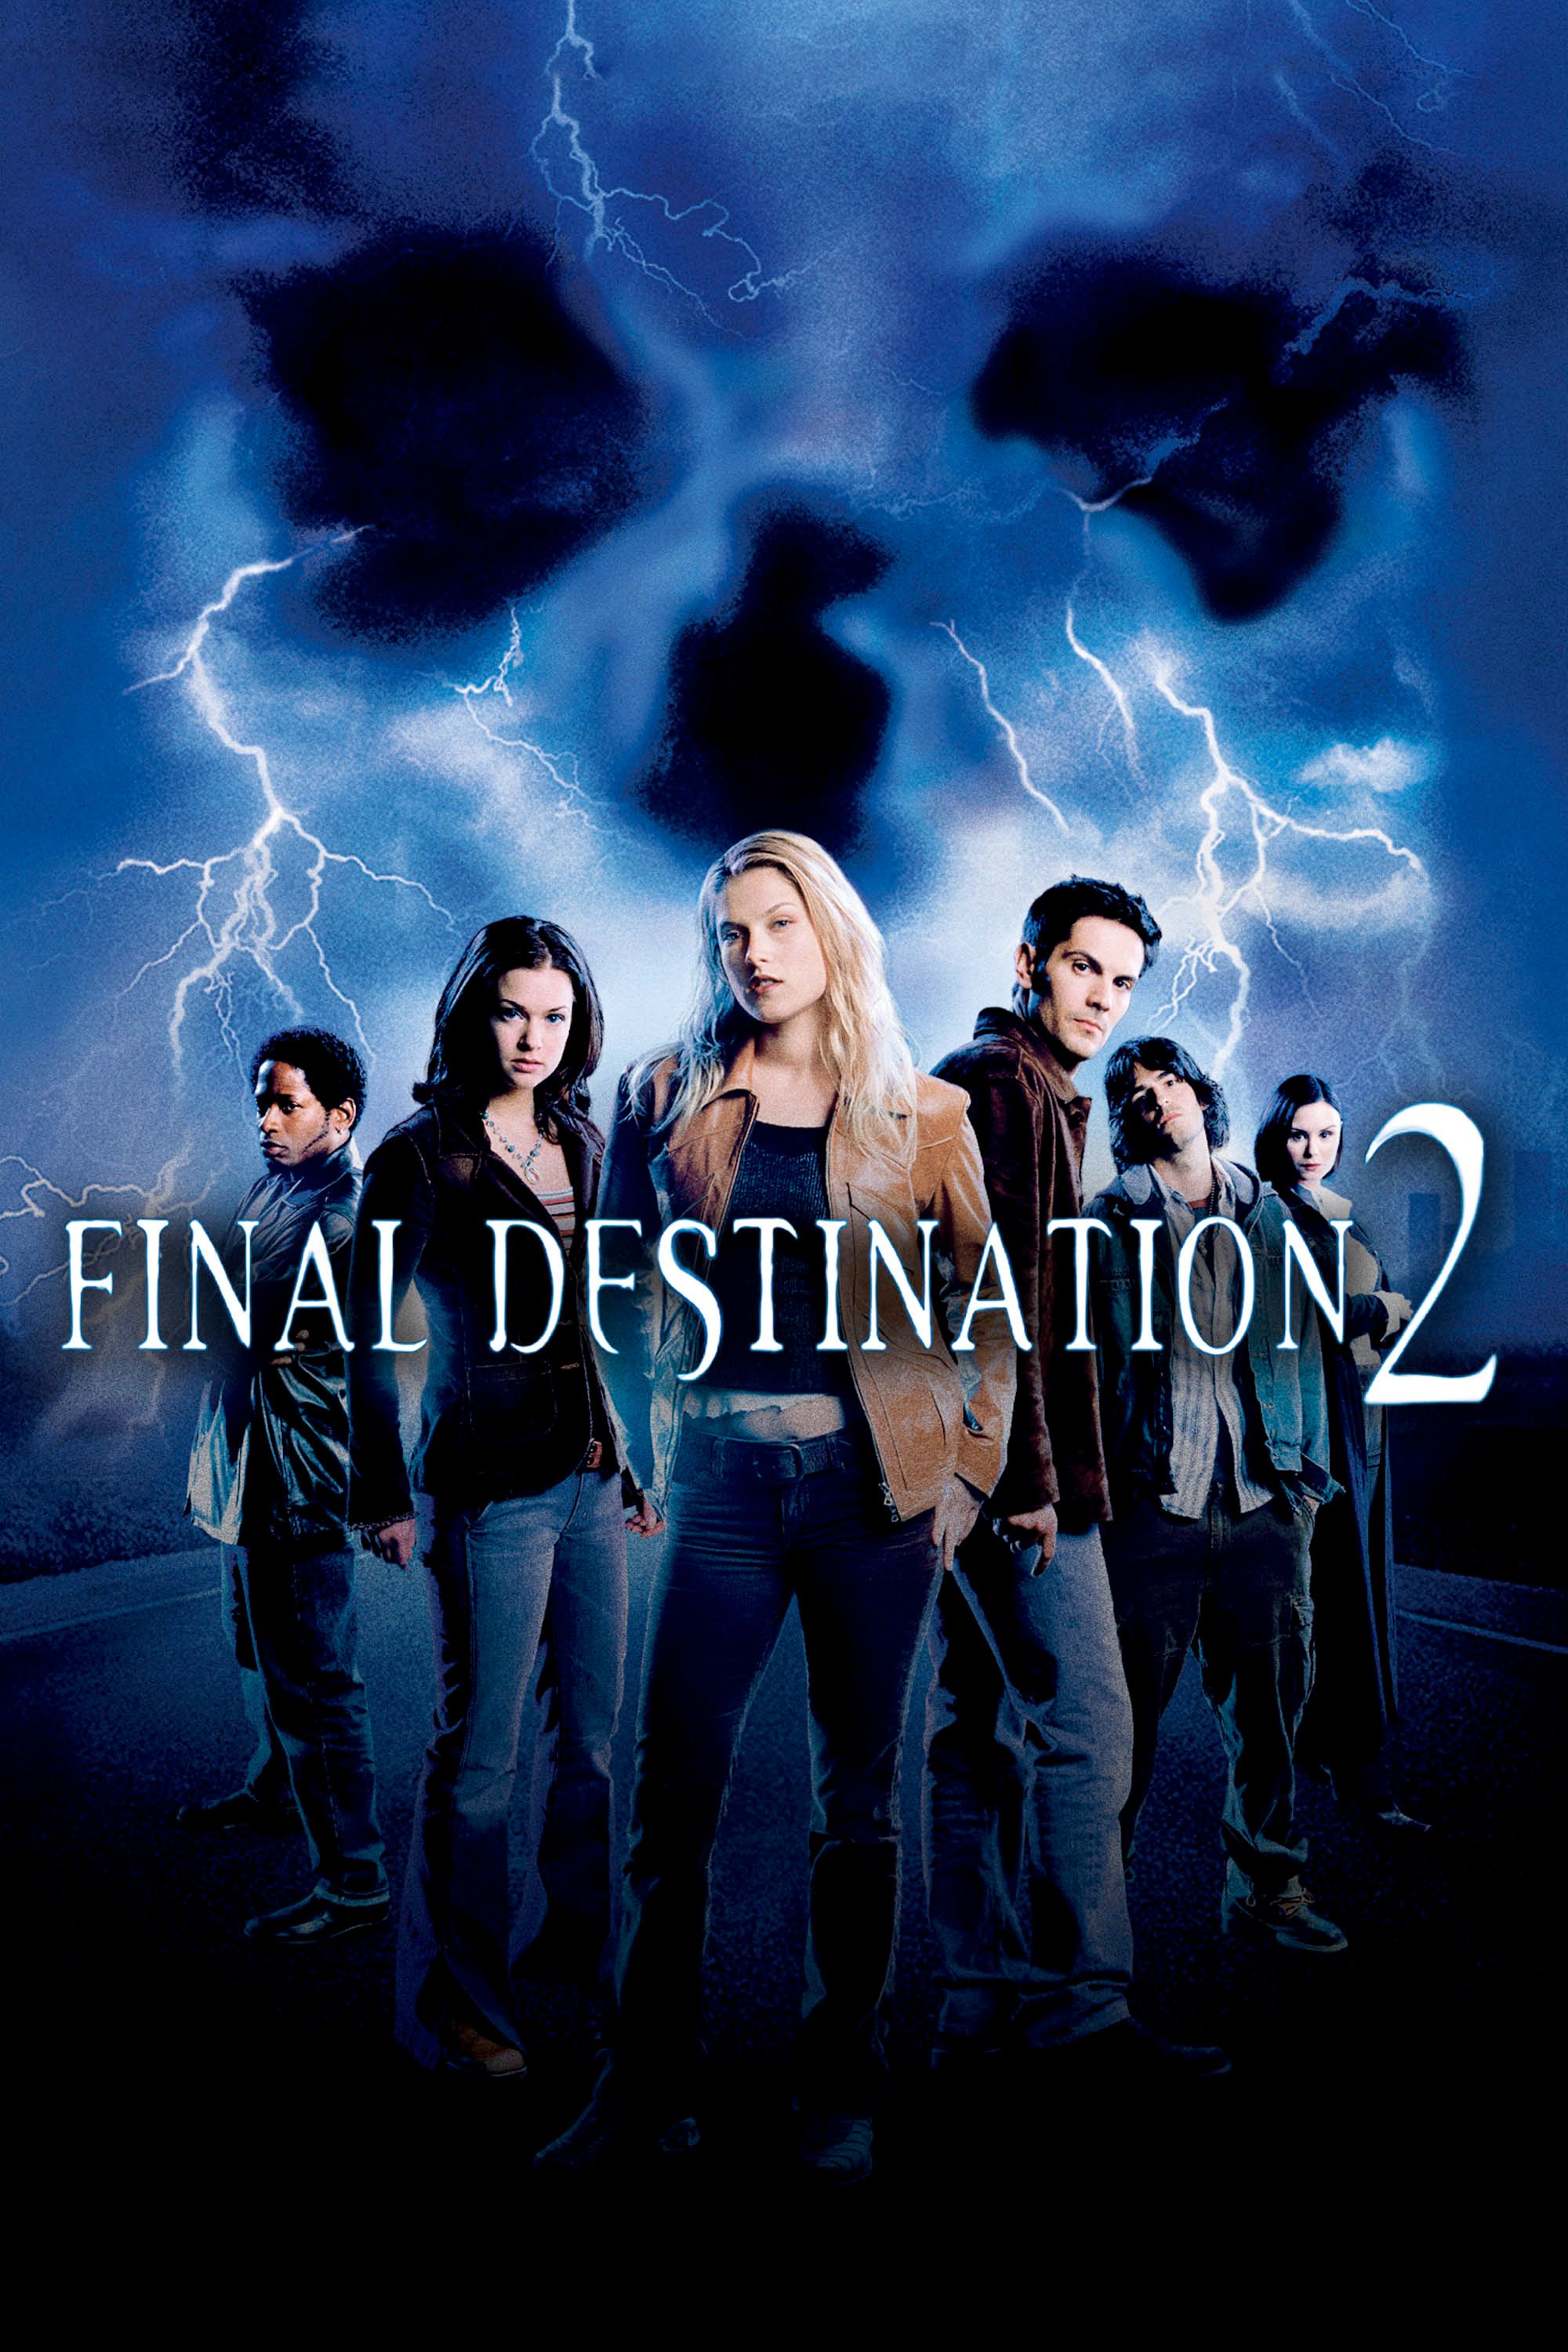 final destination 4 full movie free